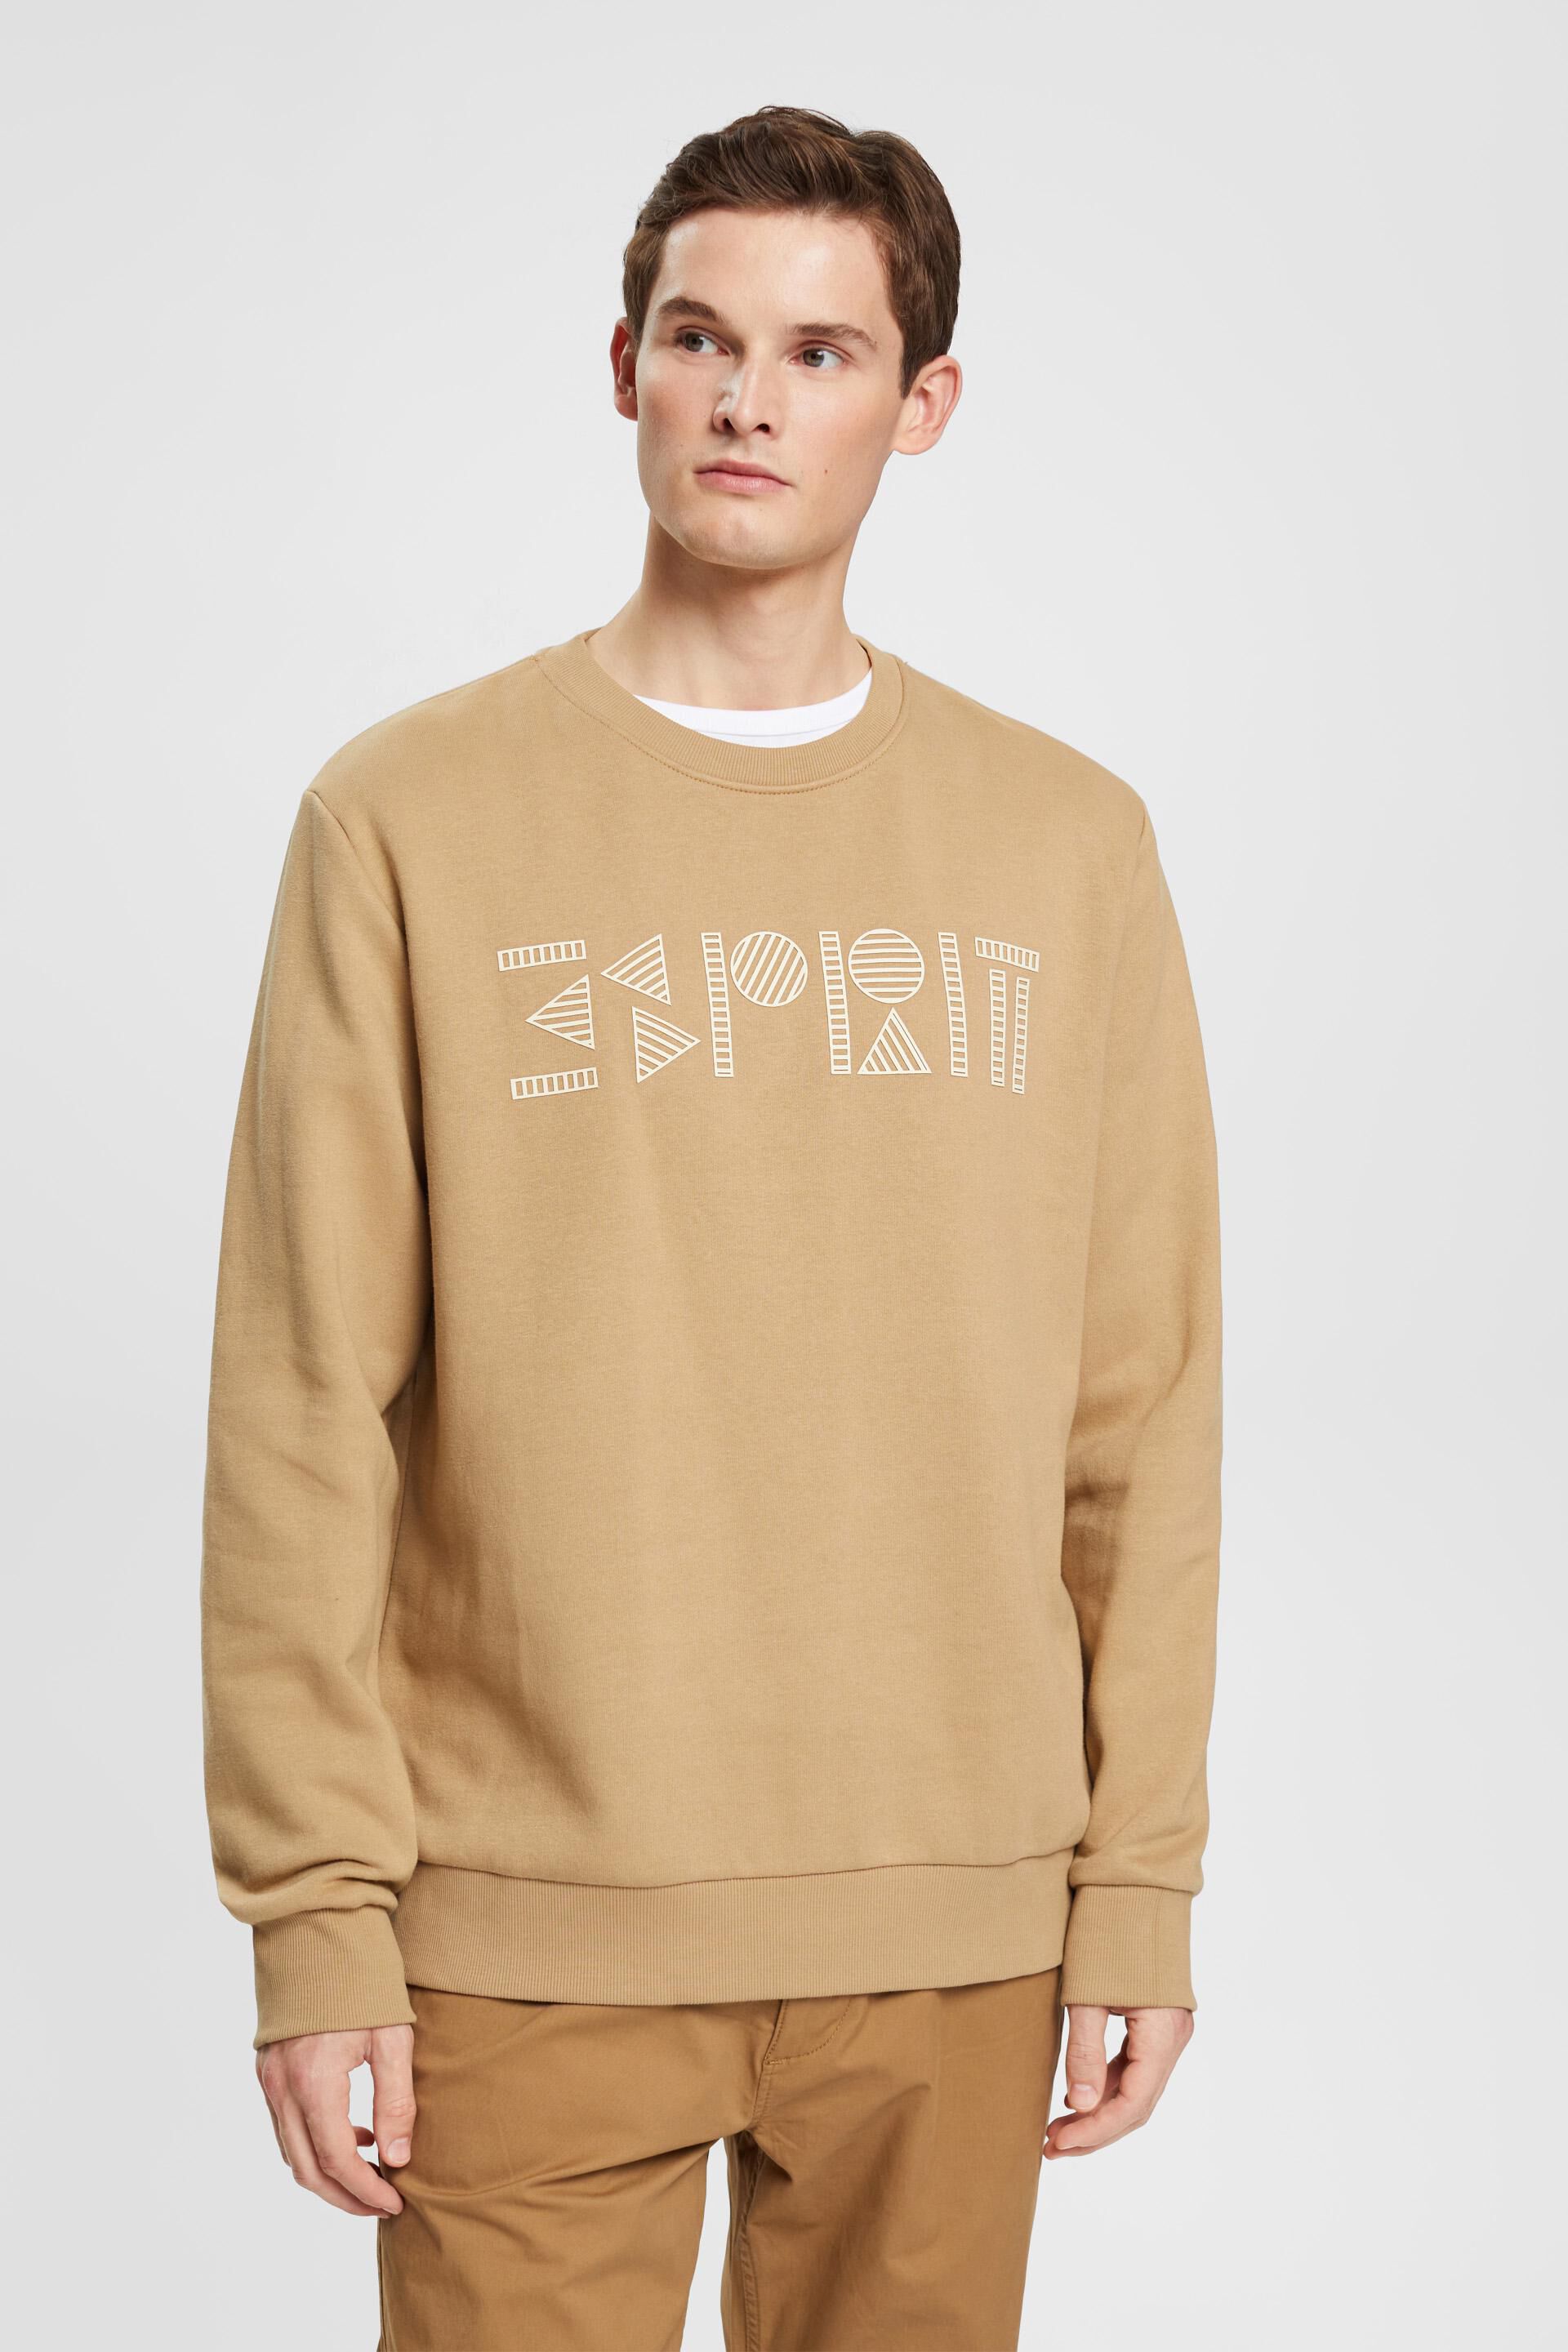 Springfield sweatshirt Rabatt 67 % HERREN Pullovers & Sweatshirts Mit Reißverschluss Weiß L 